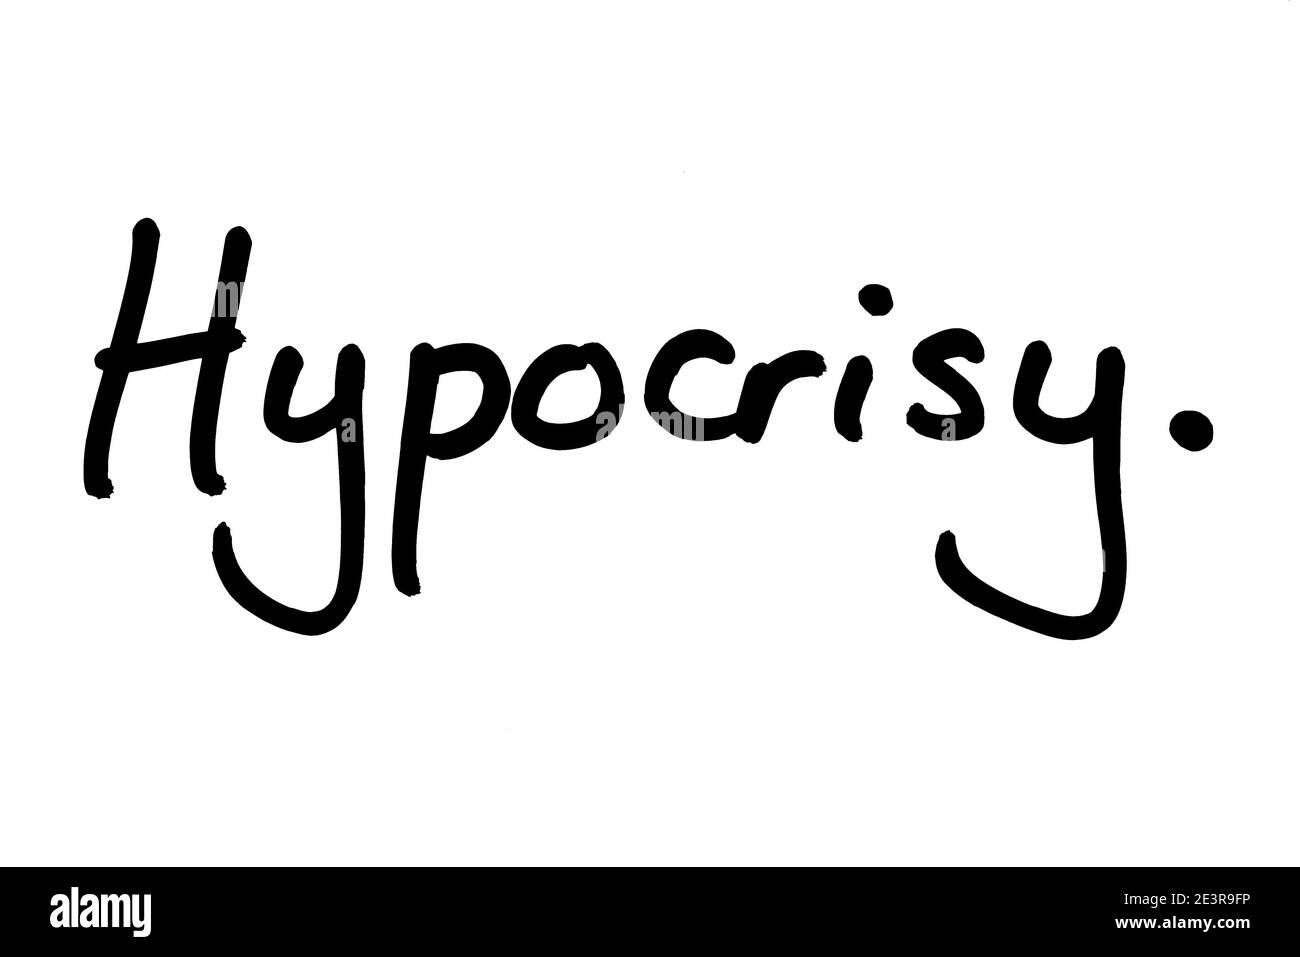 Hypocrisy, handwritten on a white background. Stock Photo